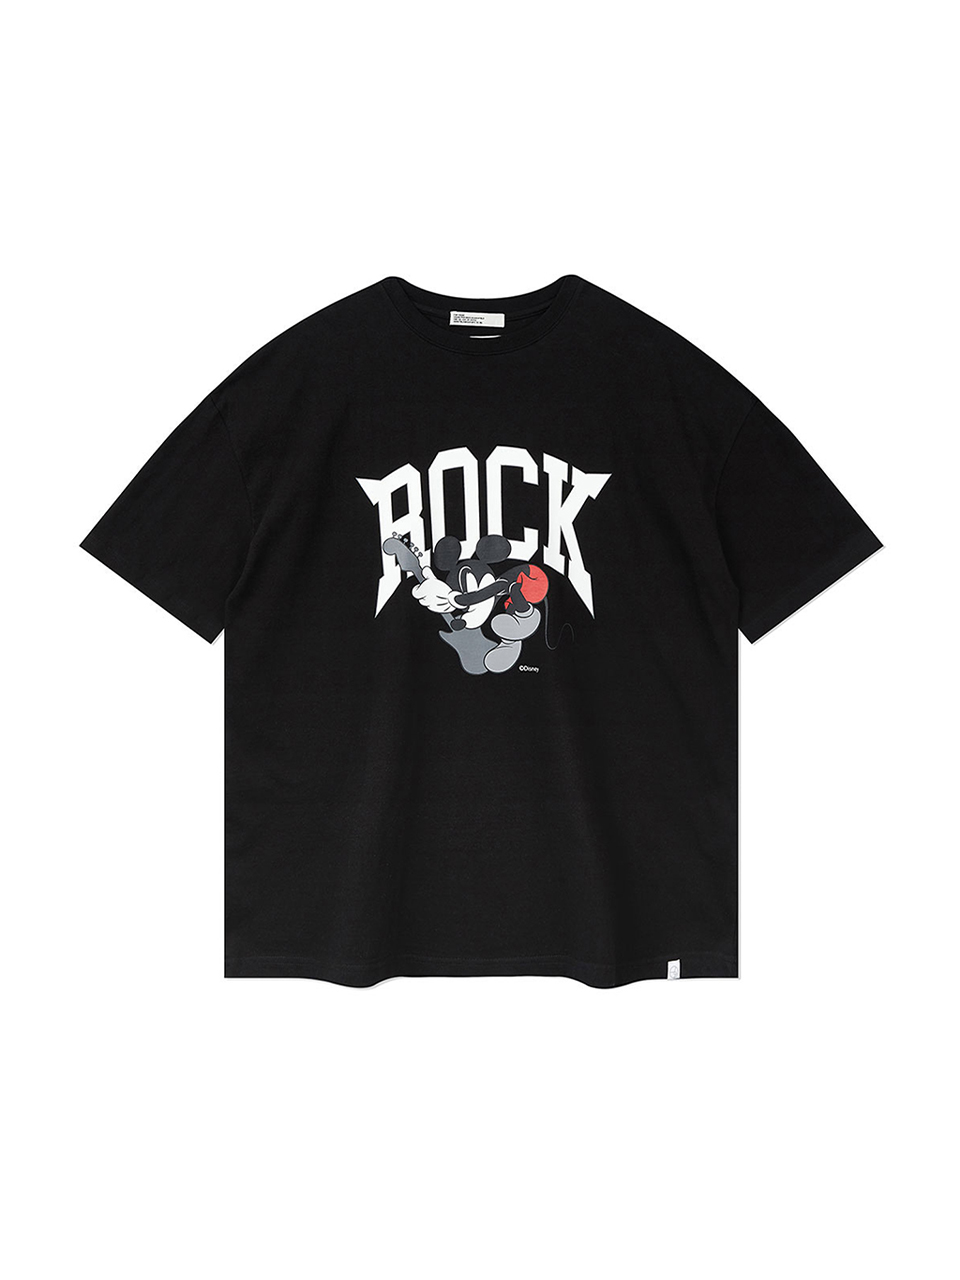 SOUNDSLIFE - Mickey Rock T-Shirt Black